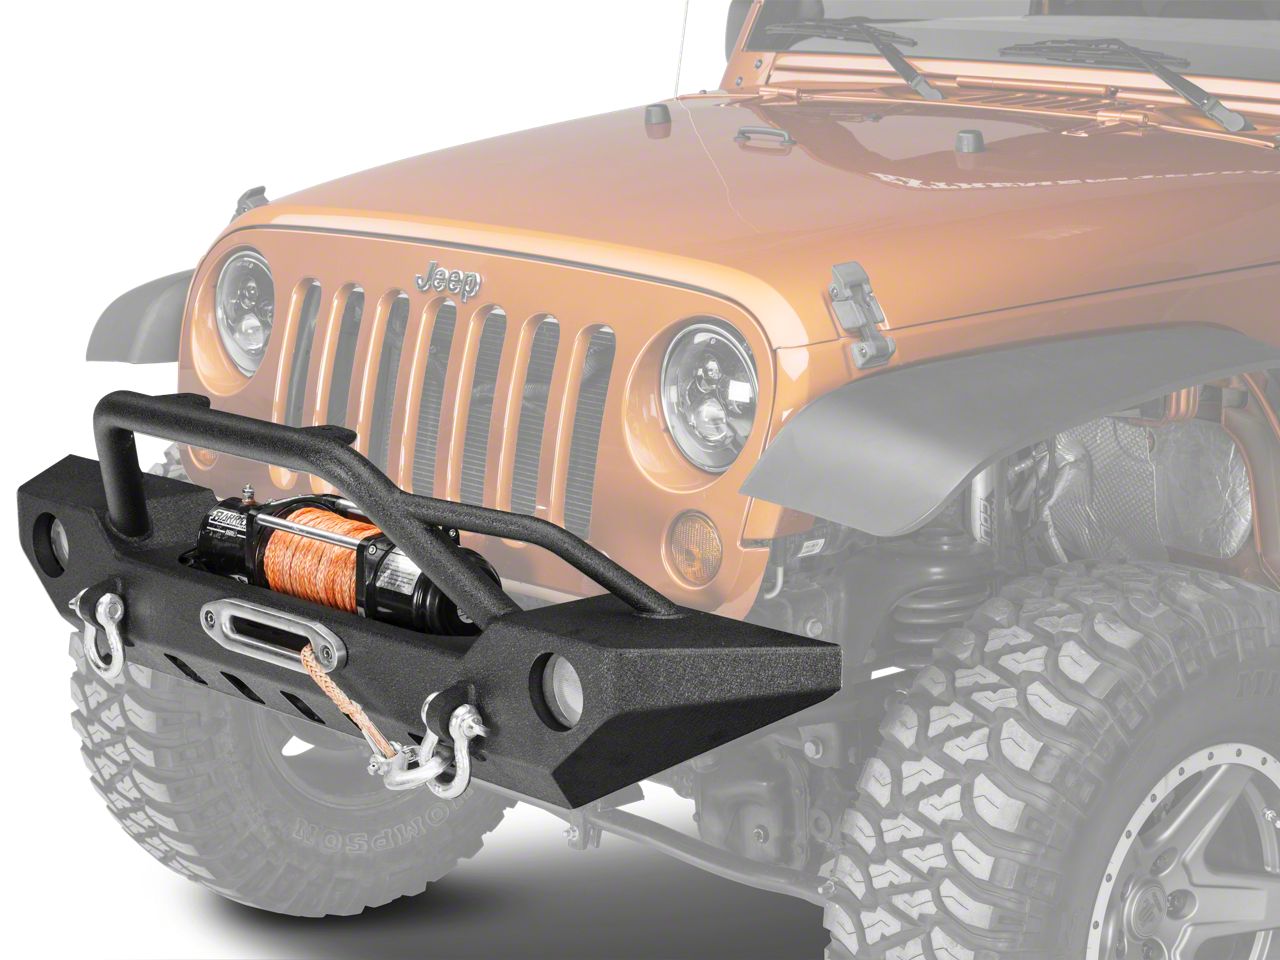 2010 Jeep Wrangler JK Accessories & Parts | ExtremeTerrain